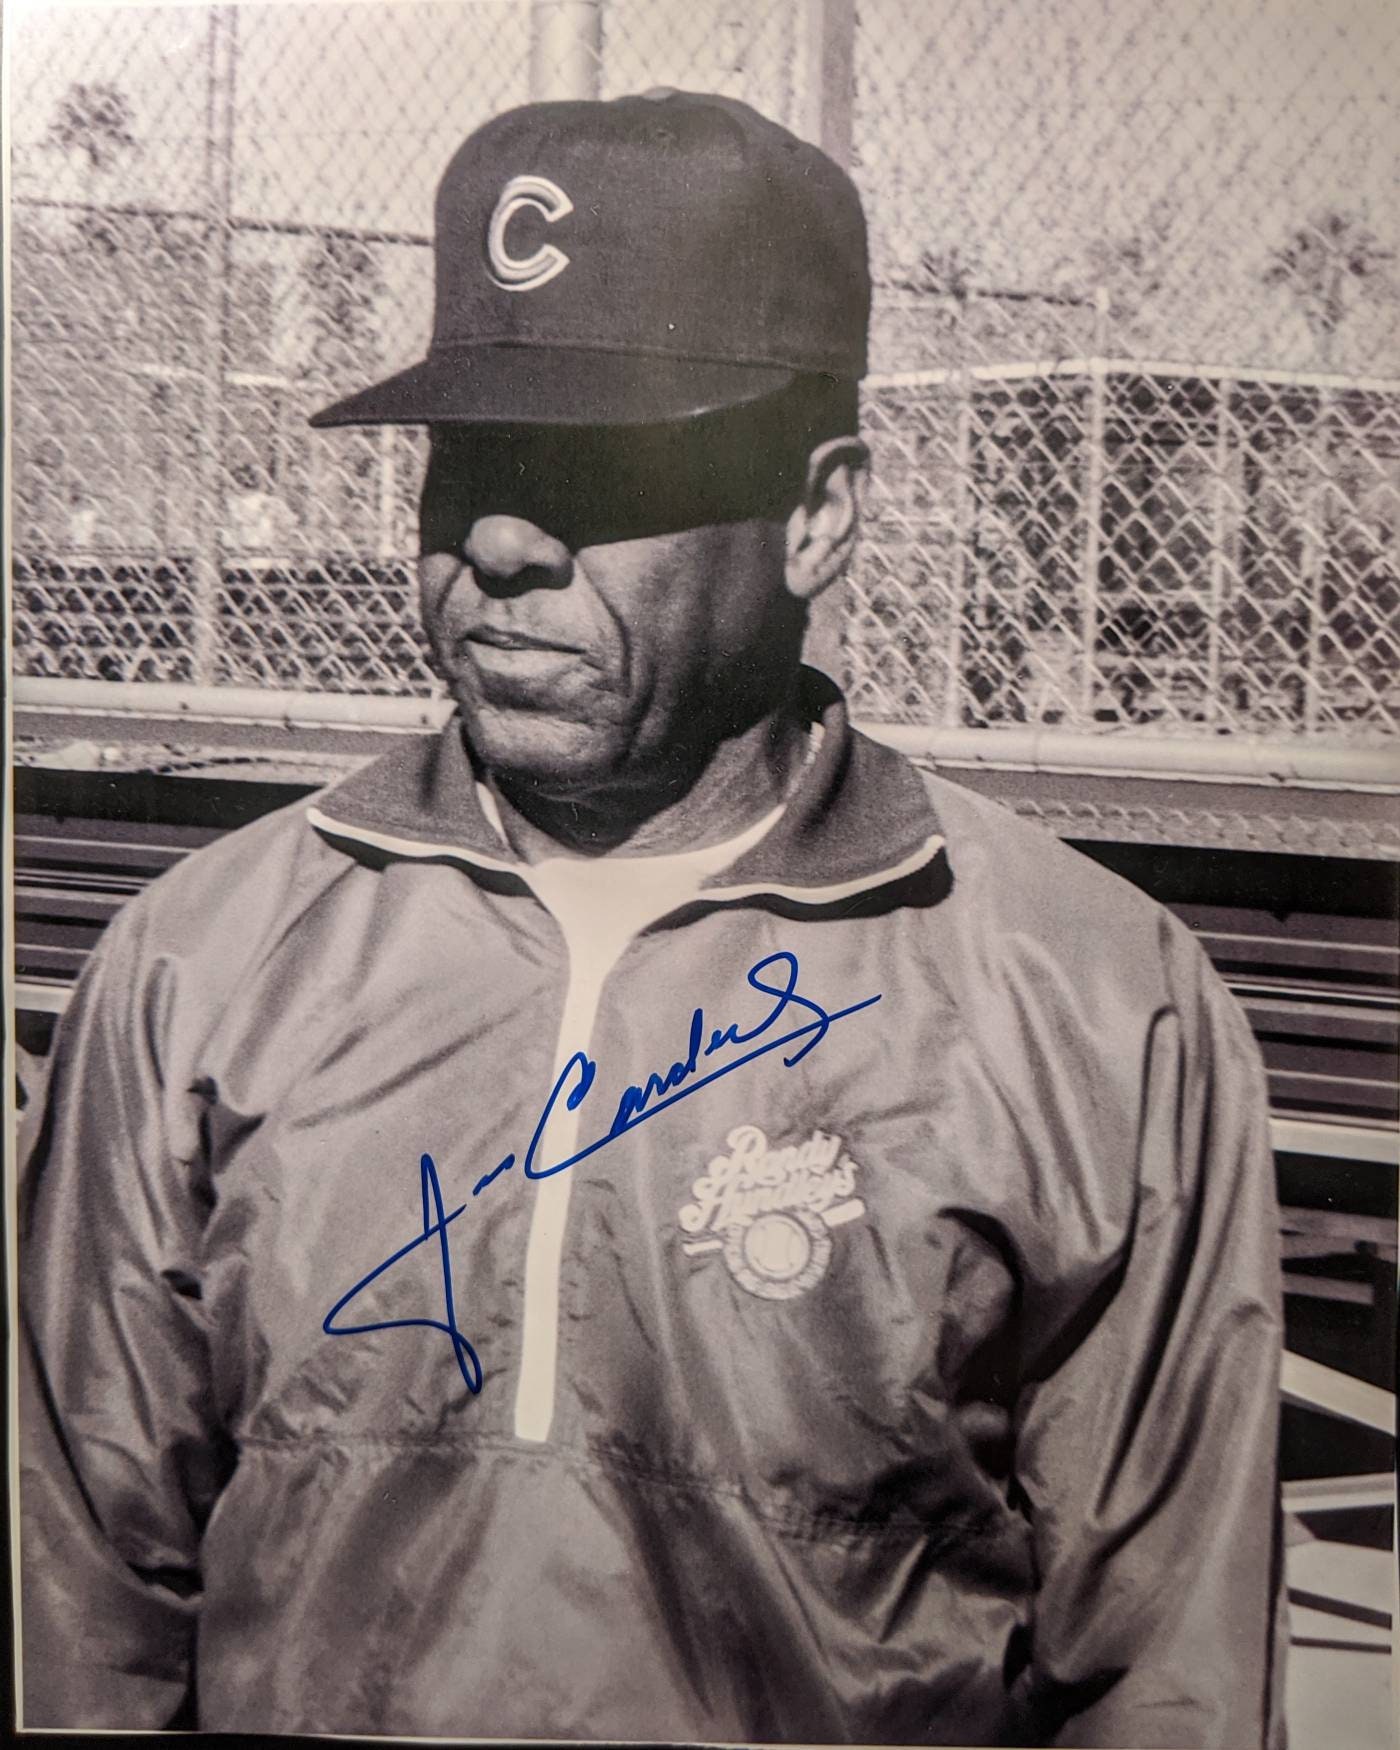 Chicago Cubs MLB Original Autographed Hats for sale